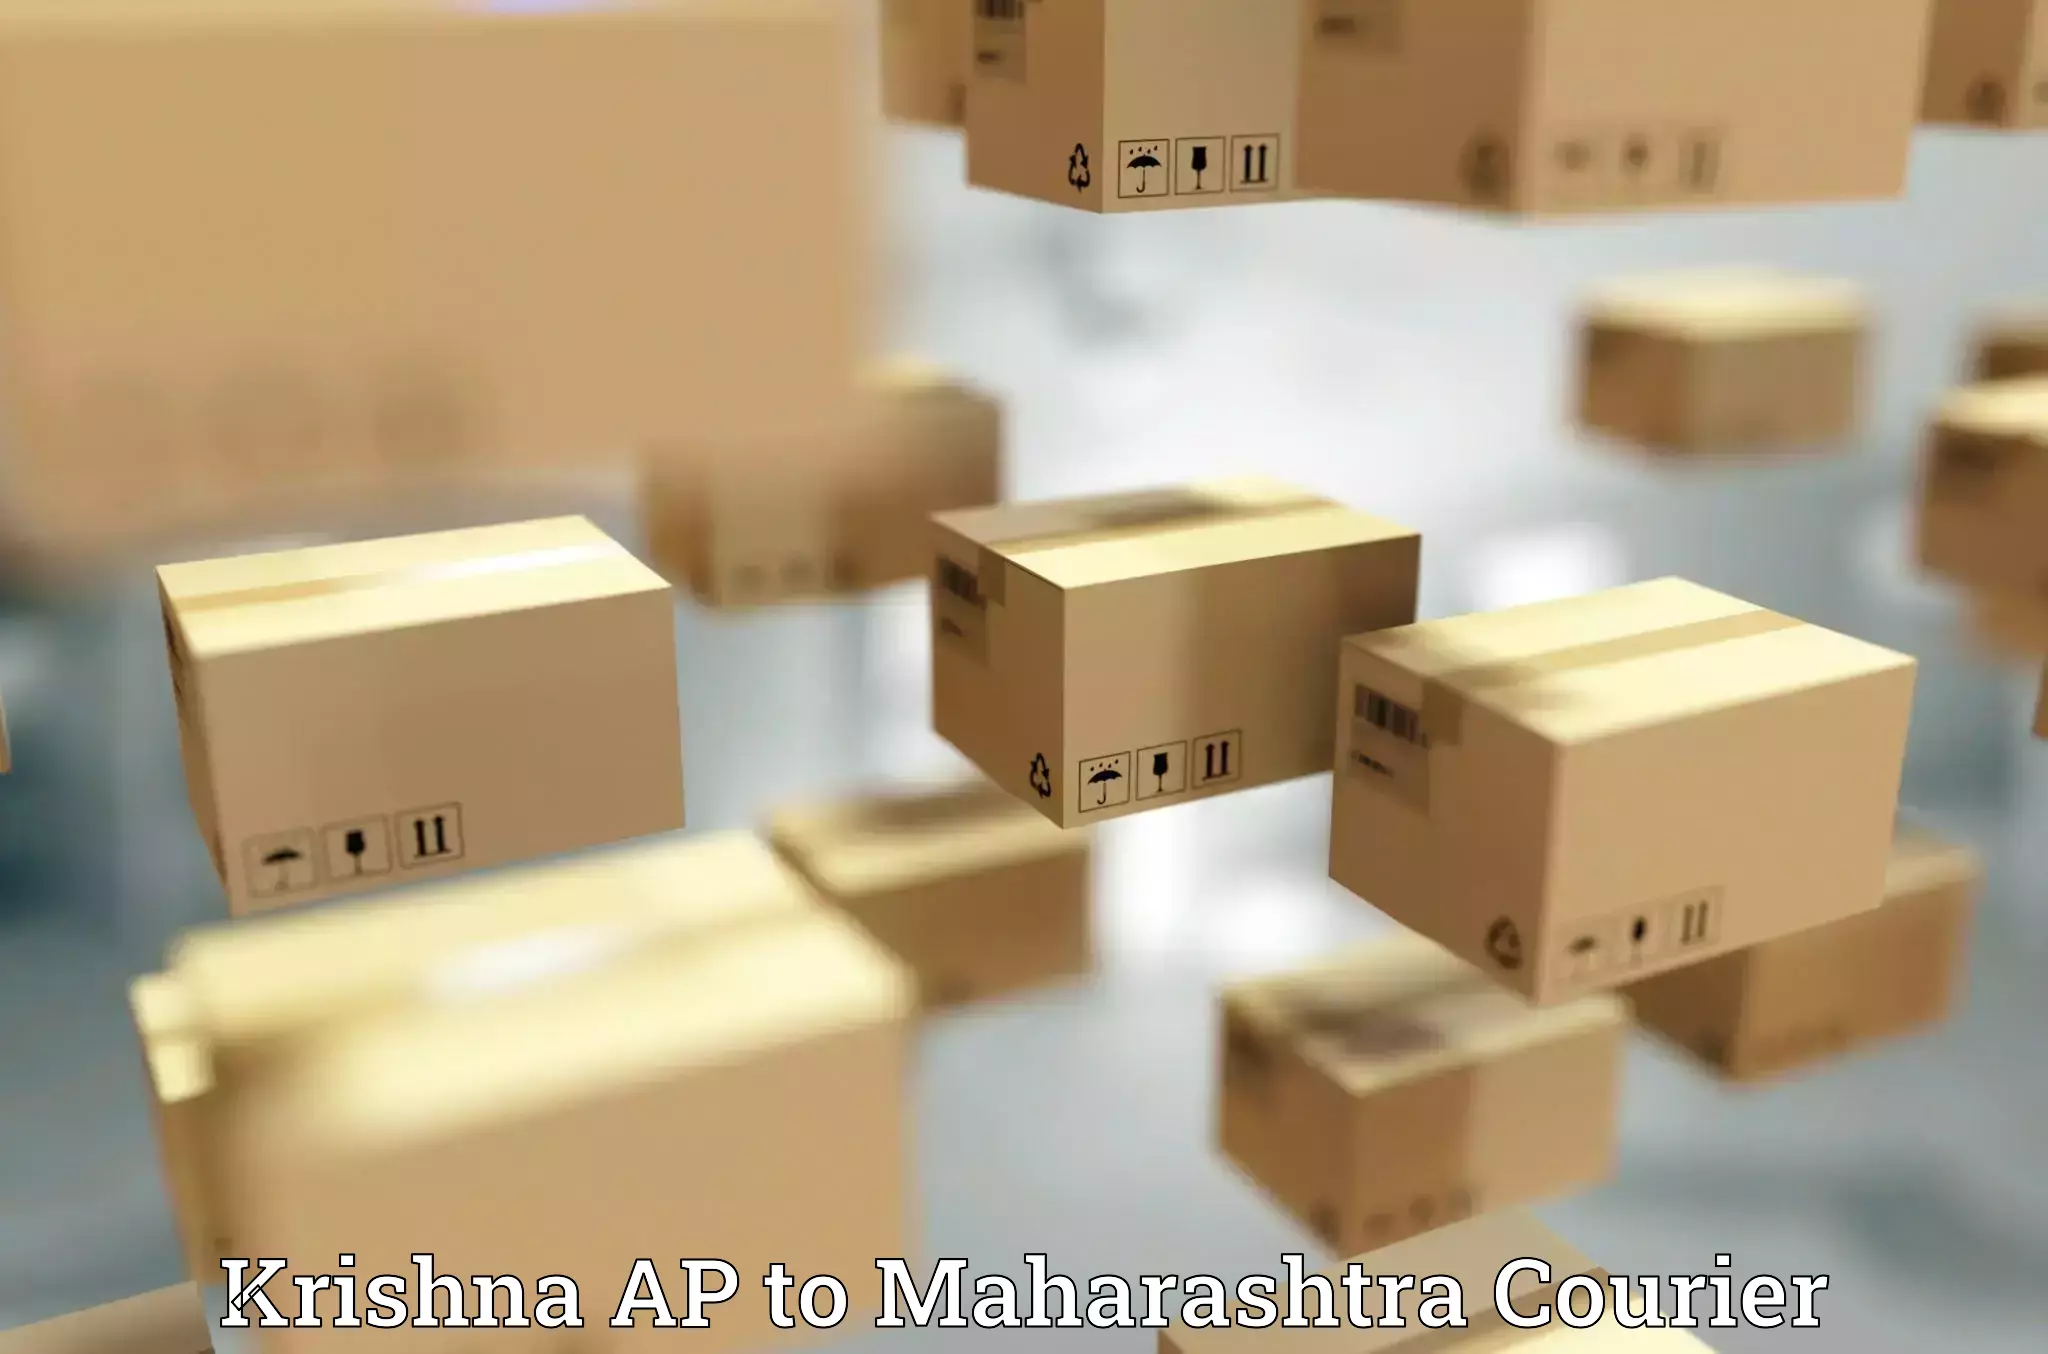 Seamless shipping experience Krishna AP to Alephata